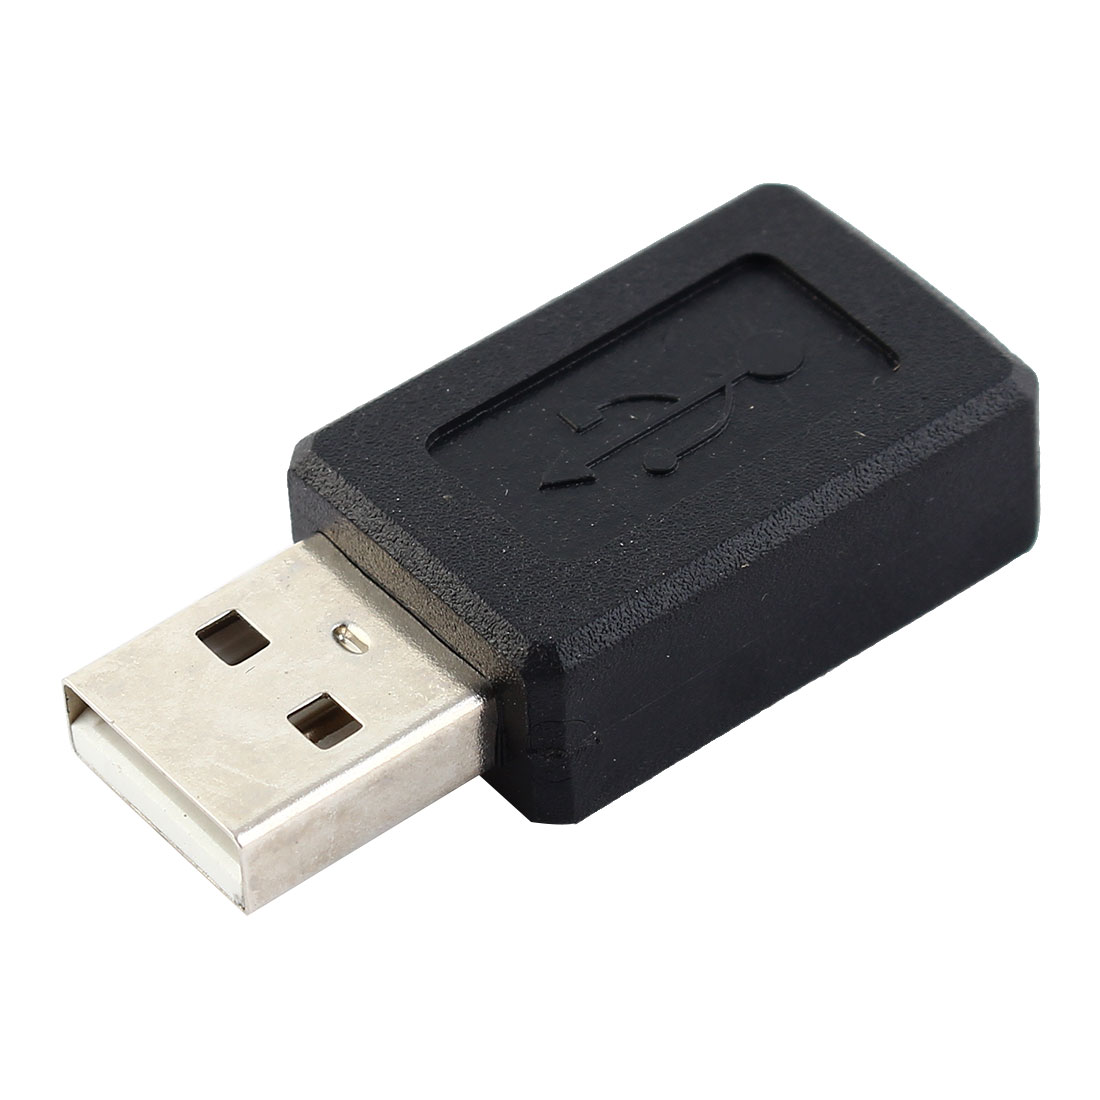 Unique Bargains 5 pin (B5) Mini Female to USB A Male Connector Adaptor